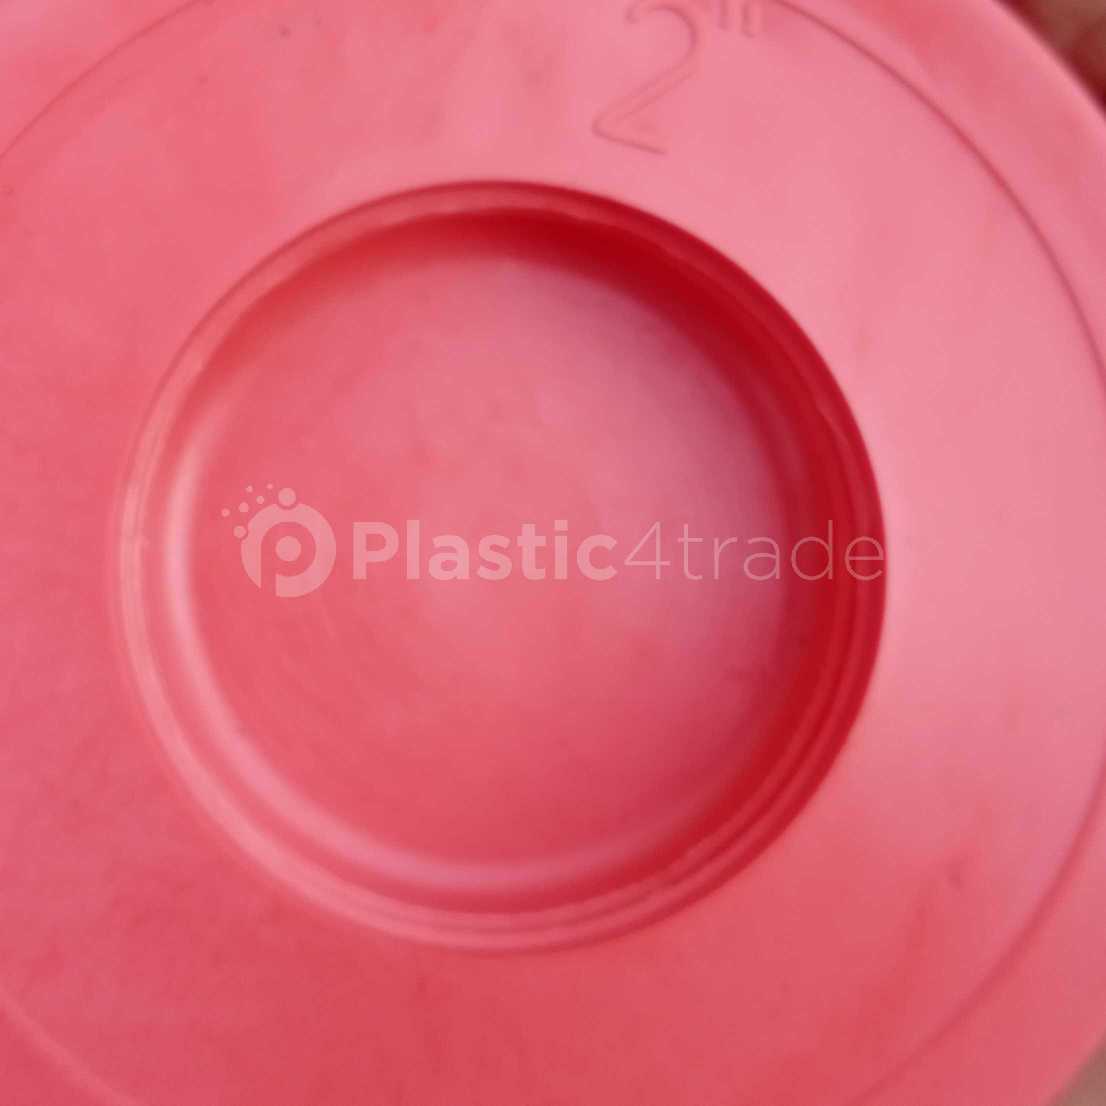 ALL PLASTIC LDPE Reprocess Granule Injection Molding gujarat india Plastic4trade